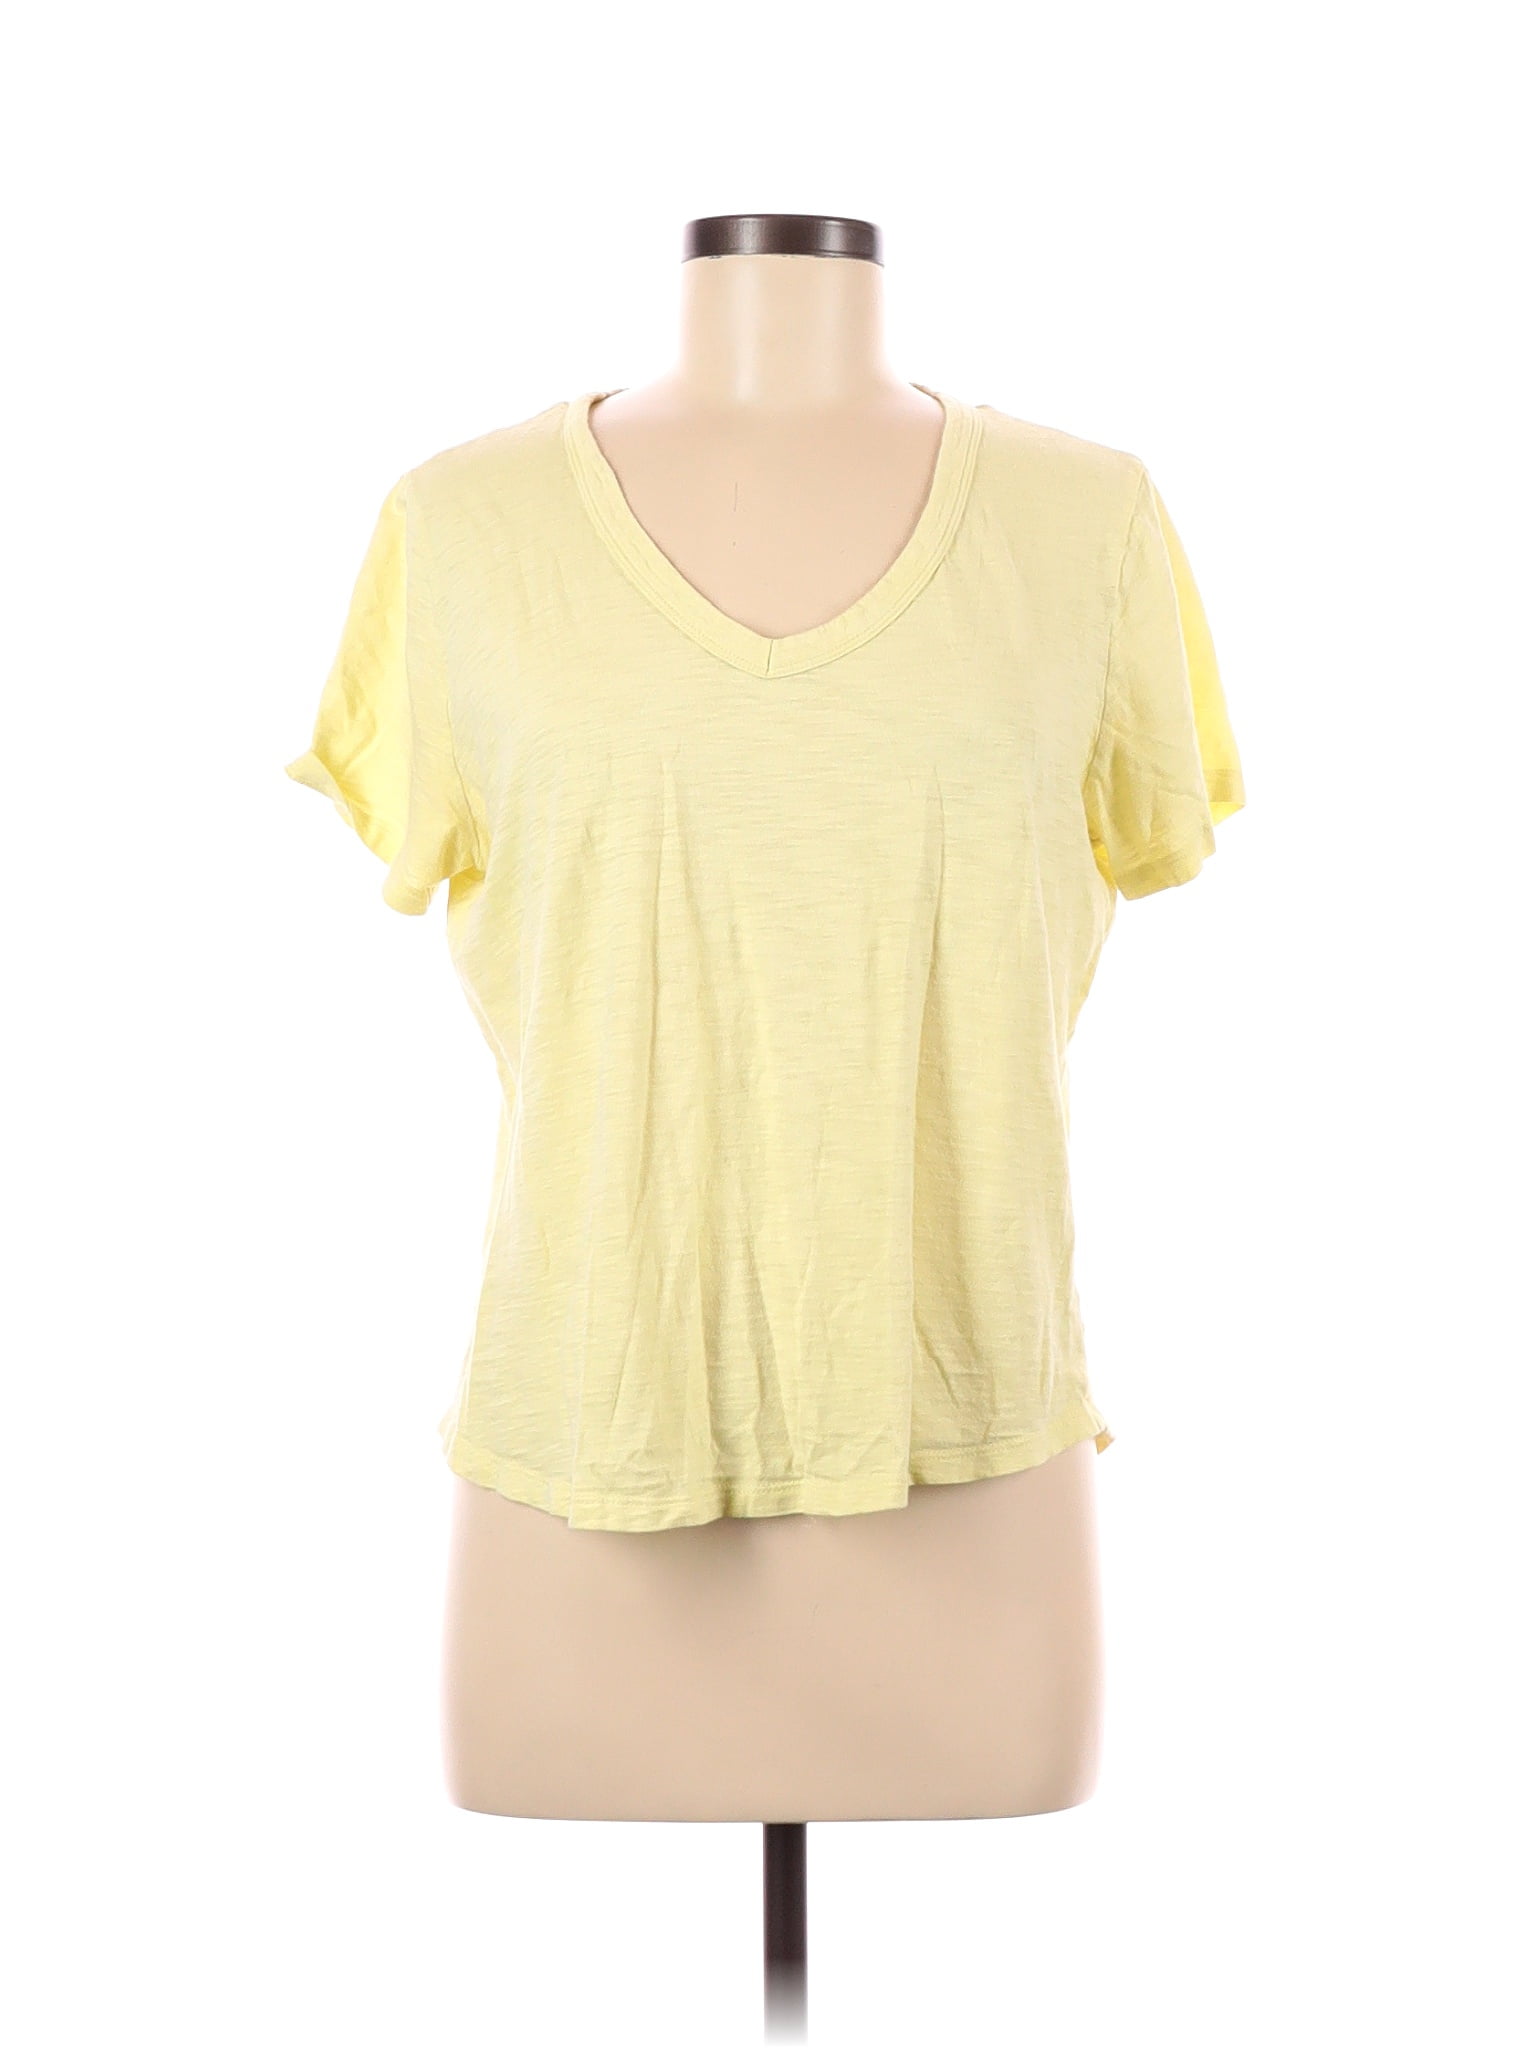 Gap Colored Yellow Short Sleeve T-Shirt Size M - 66% off | thredUP